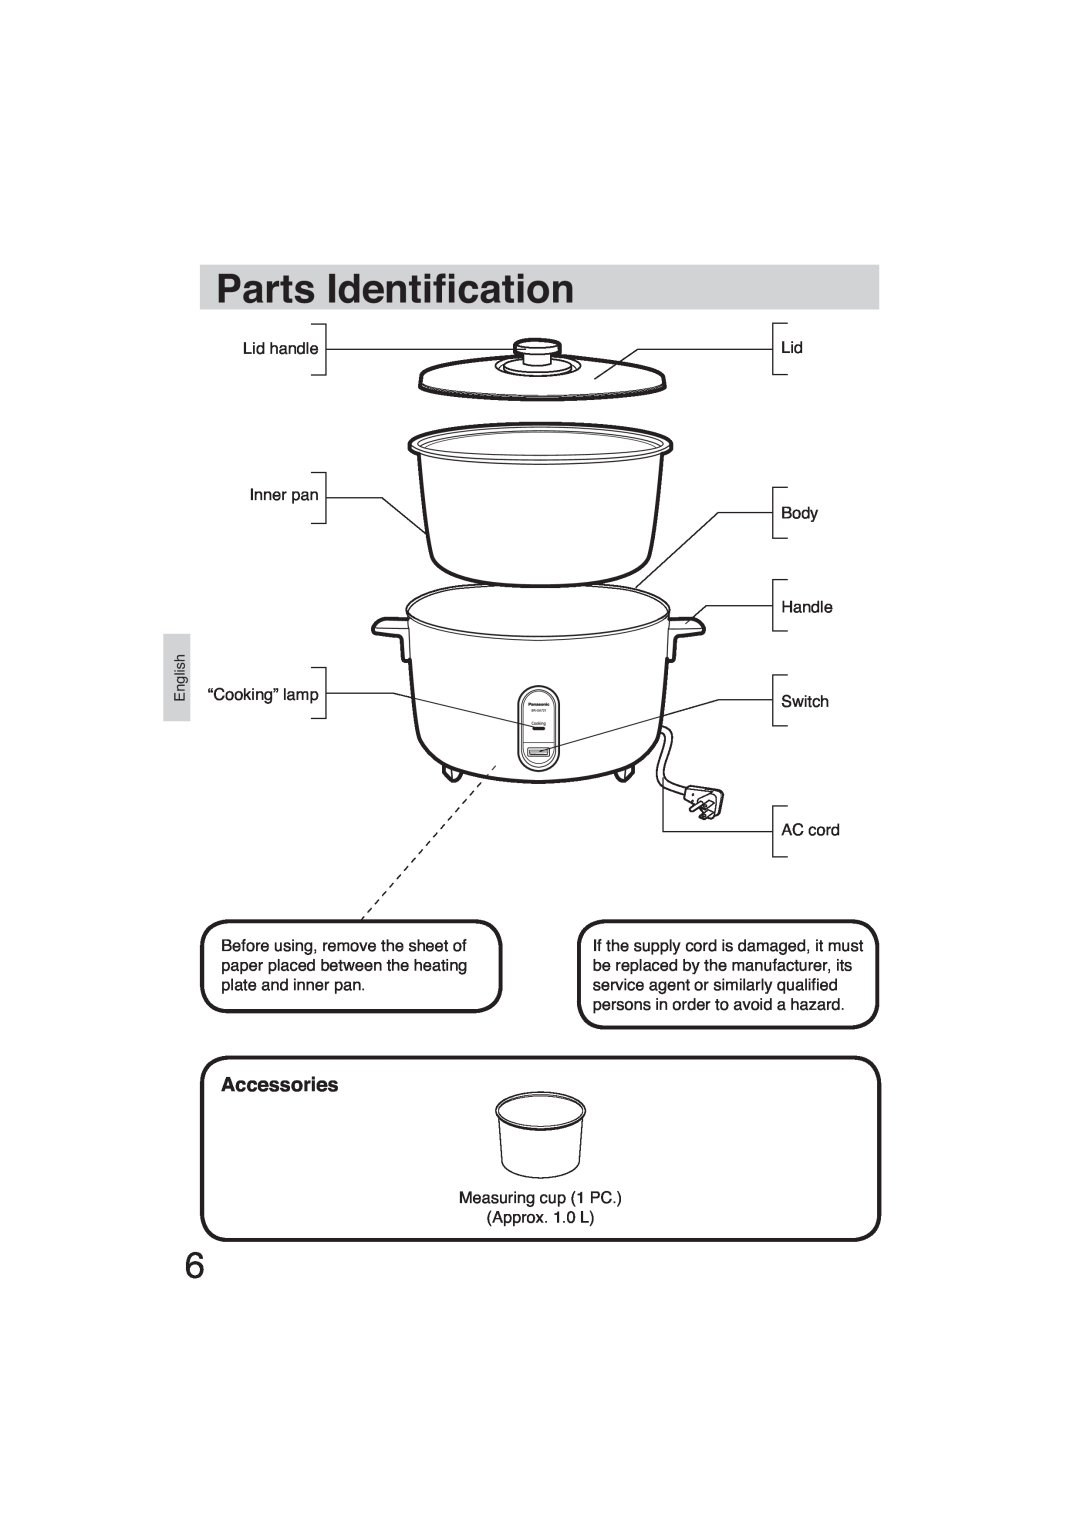 Panasonic SR-GA721 manuel dutilisation Parts Identi cation, Accessories 